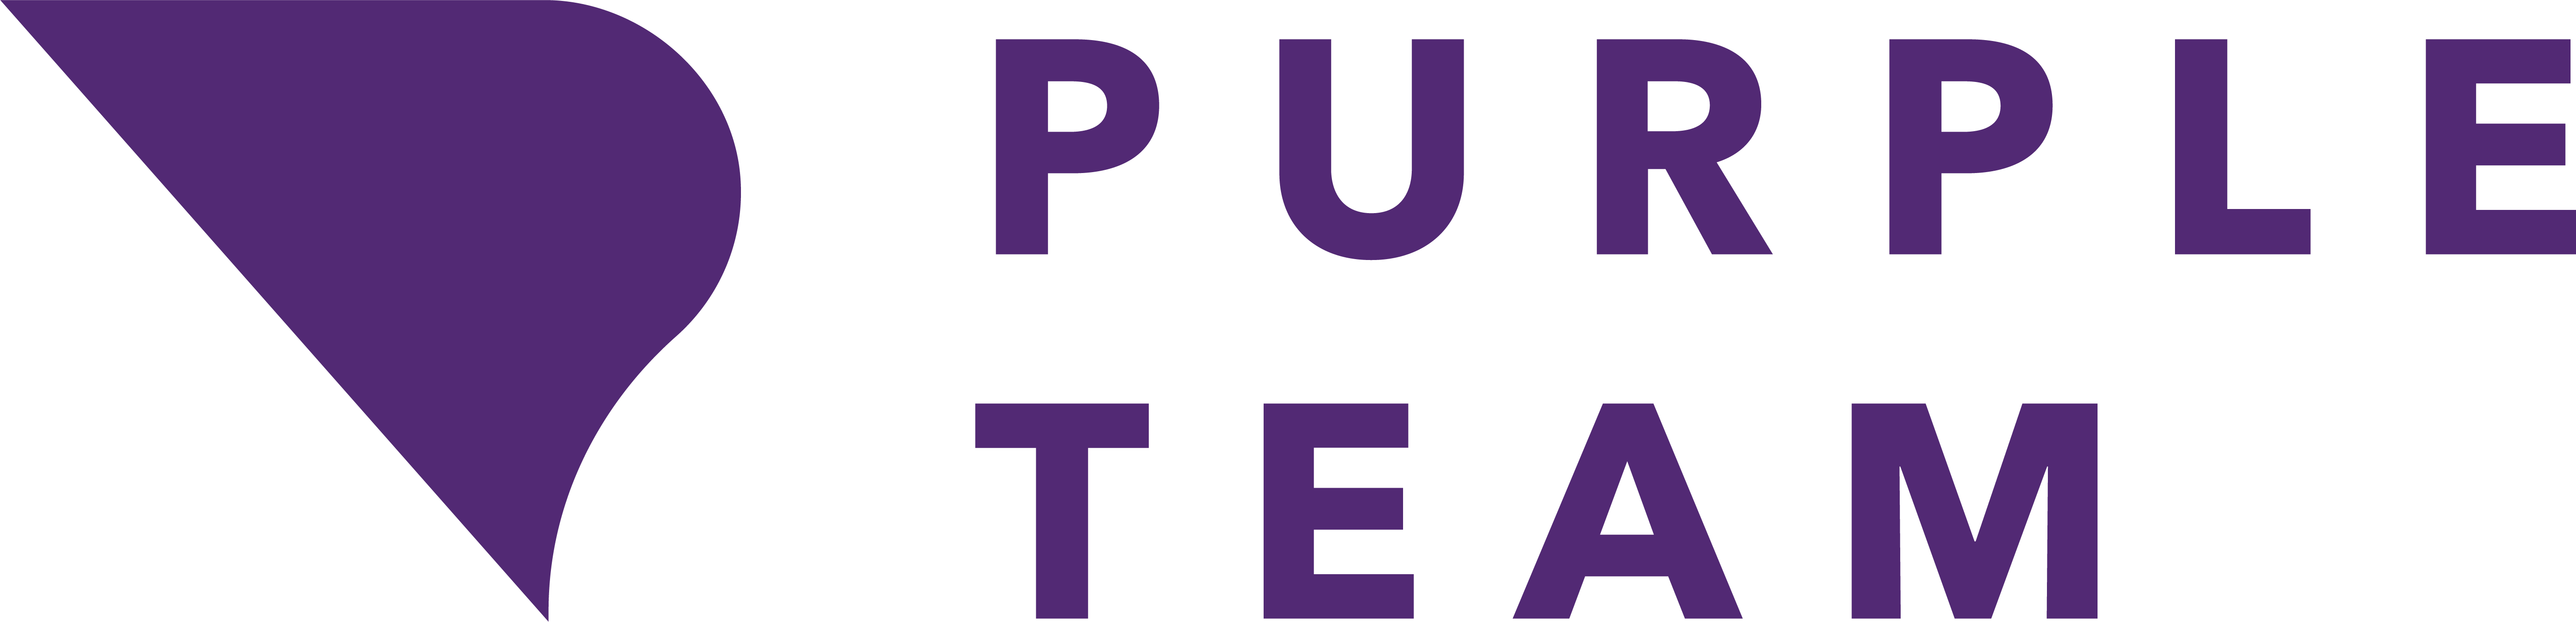 Purple Technology